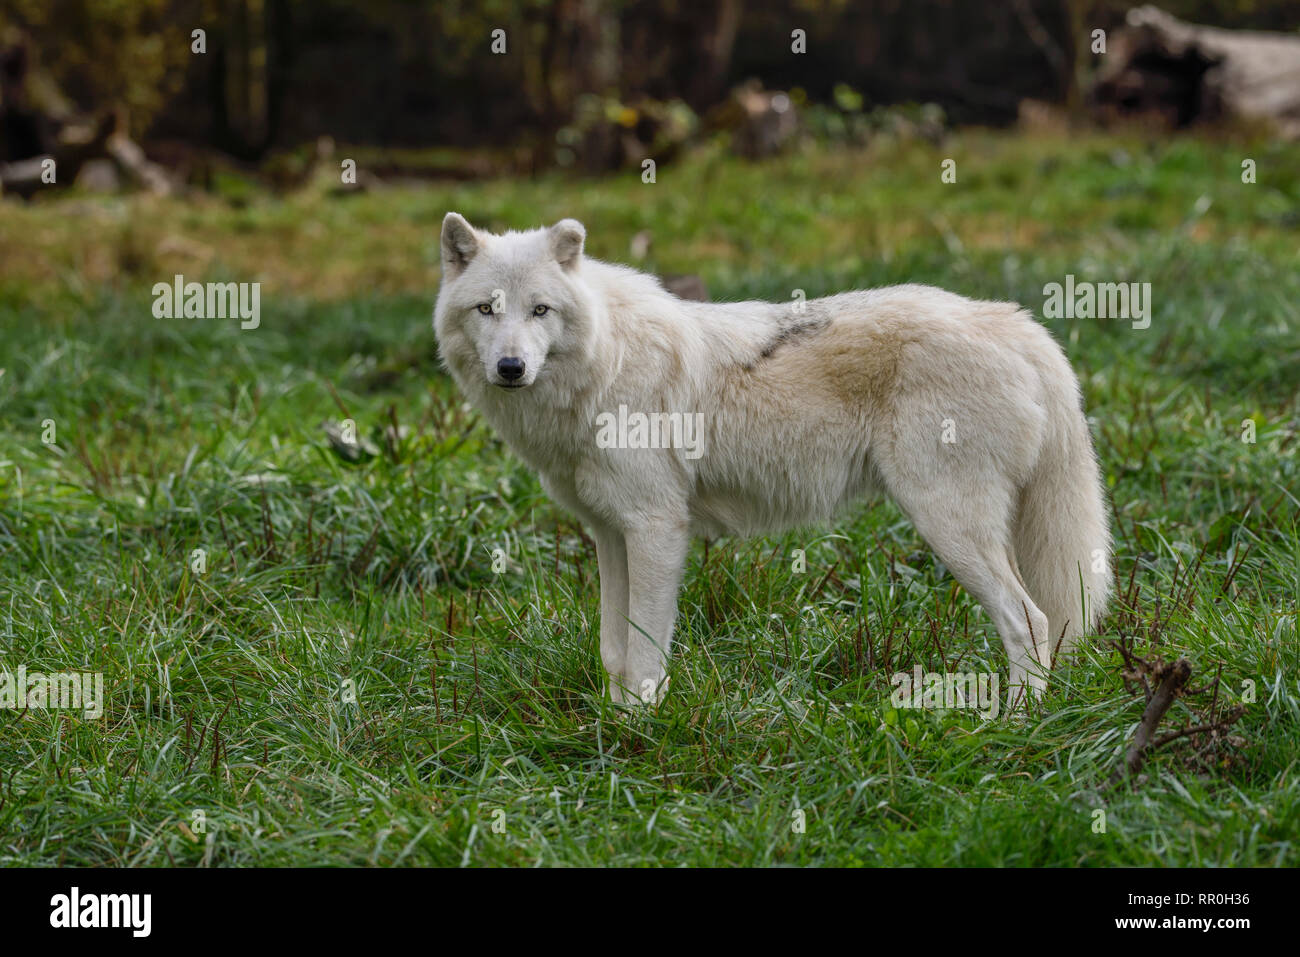 Zoologia / animali, mammifero (mammalia), Arctic Wolf, lupo polare artico o lupo (Canis lupus arctos), Par, Additional-Rights-Clearance-Info-Not-Available Foto Stock